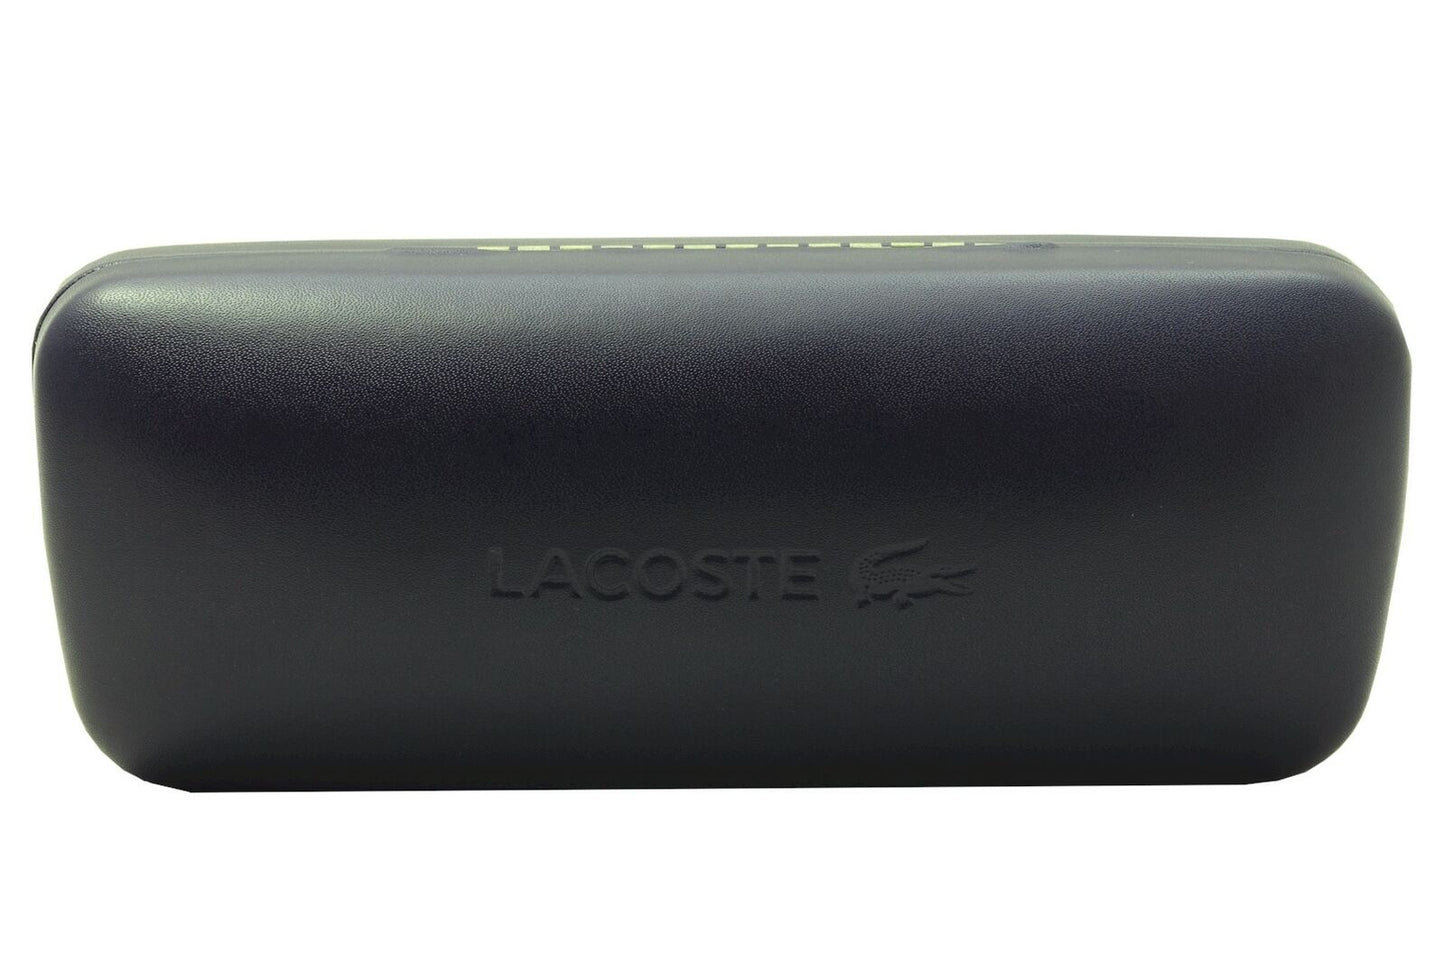 Lacoste L2921-001 52mm New Eyeglasses